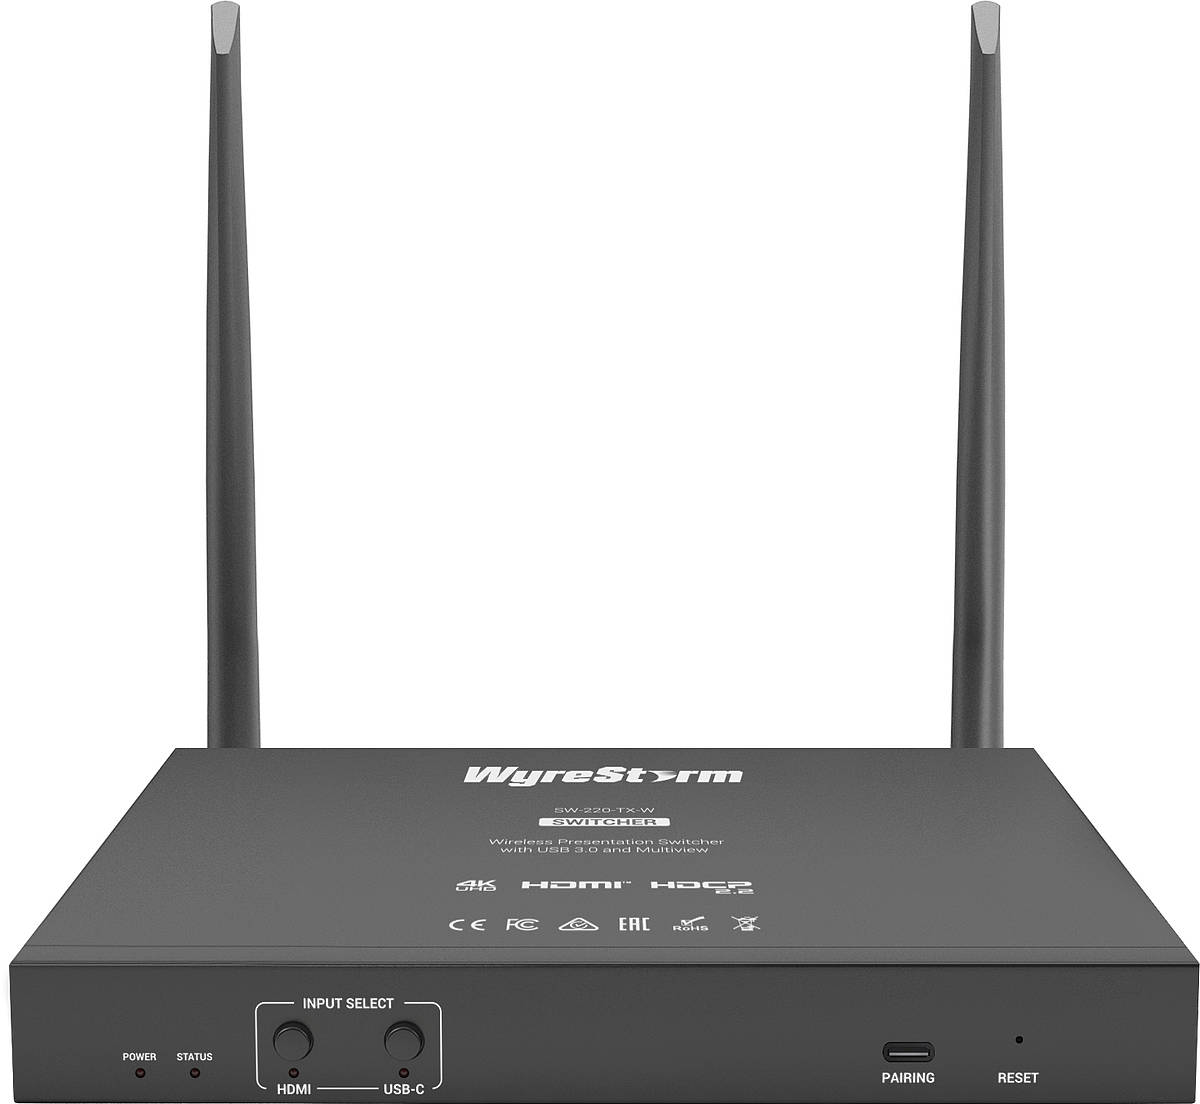 WyreStorm SW-220-TX-W 3:1 HDMI / USB-C / Wireless to HDMI Switcher product image. Click to enlarge.